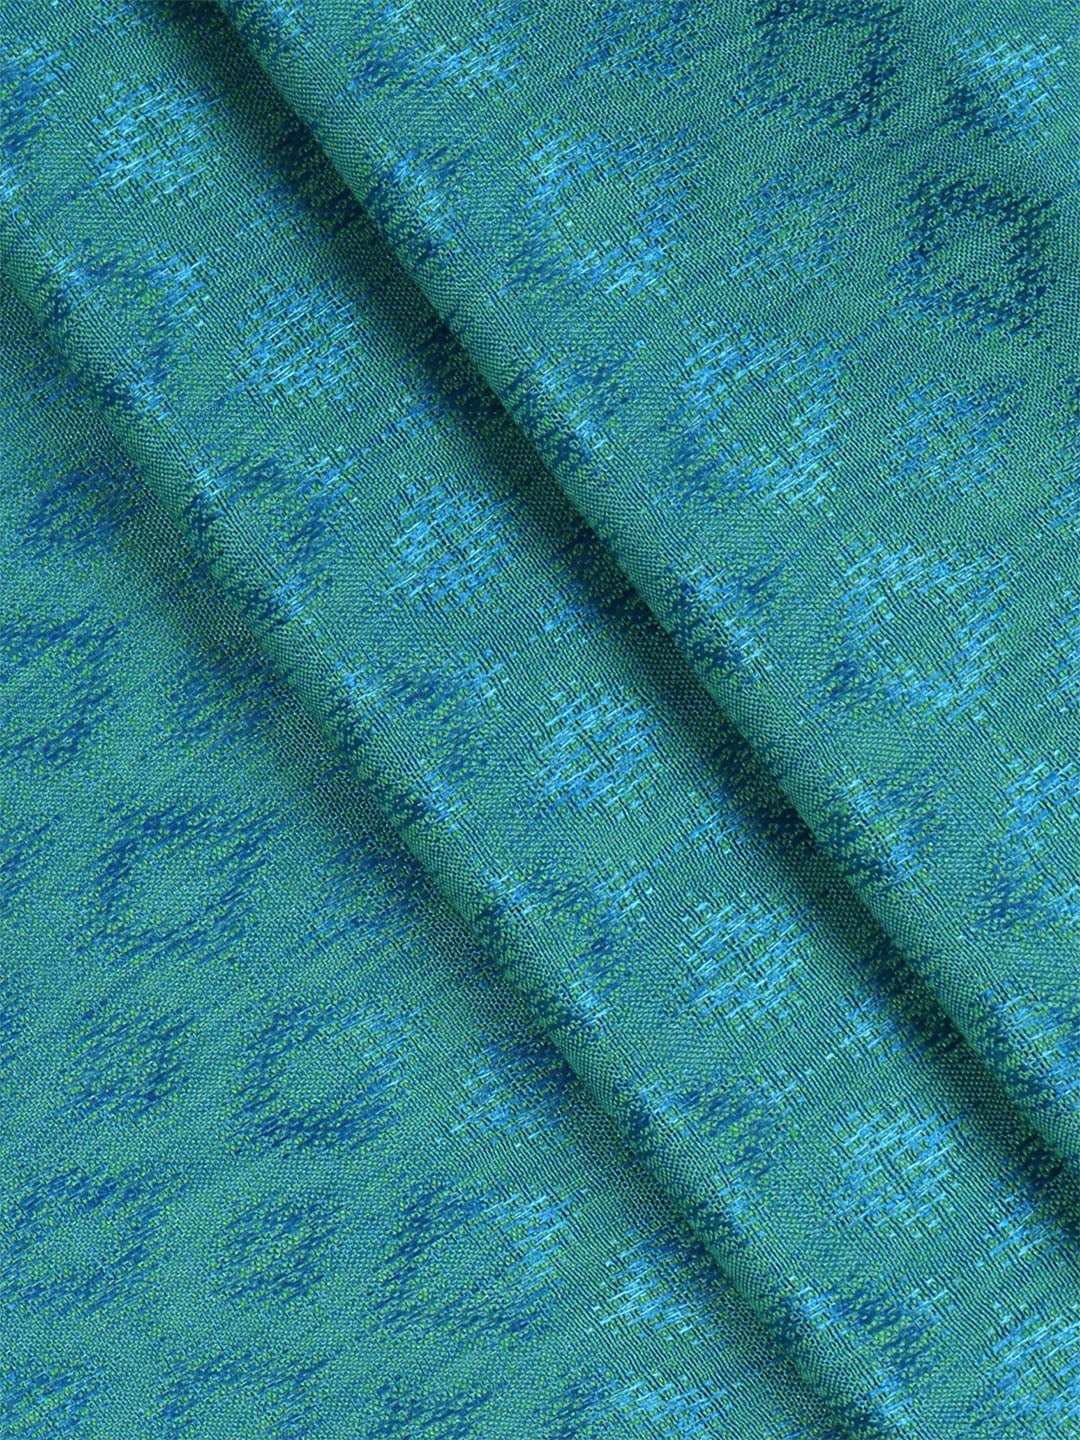 Cotton Blended Blue & Green Colour All Over Design Shirt Fabric Galaxy Art